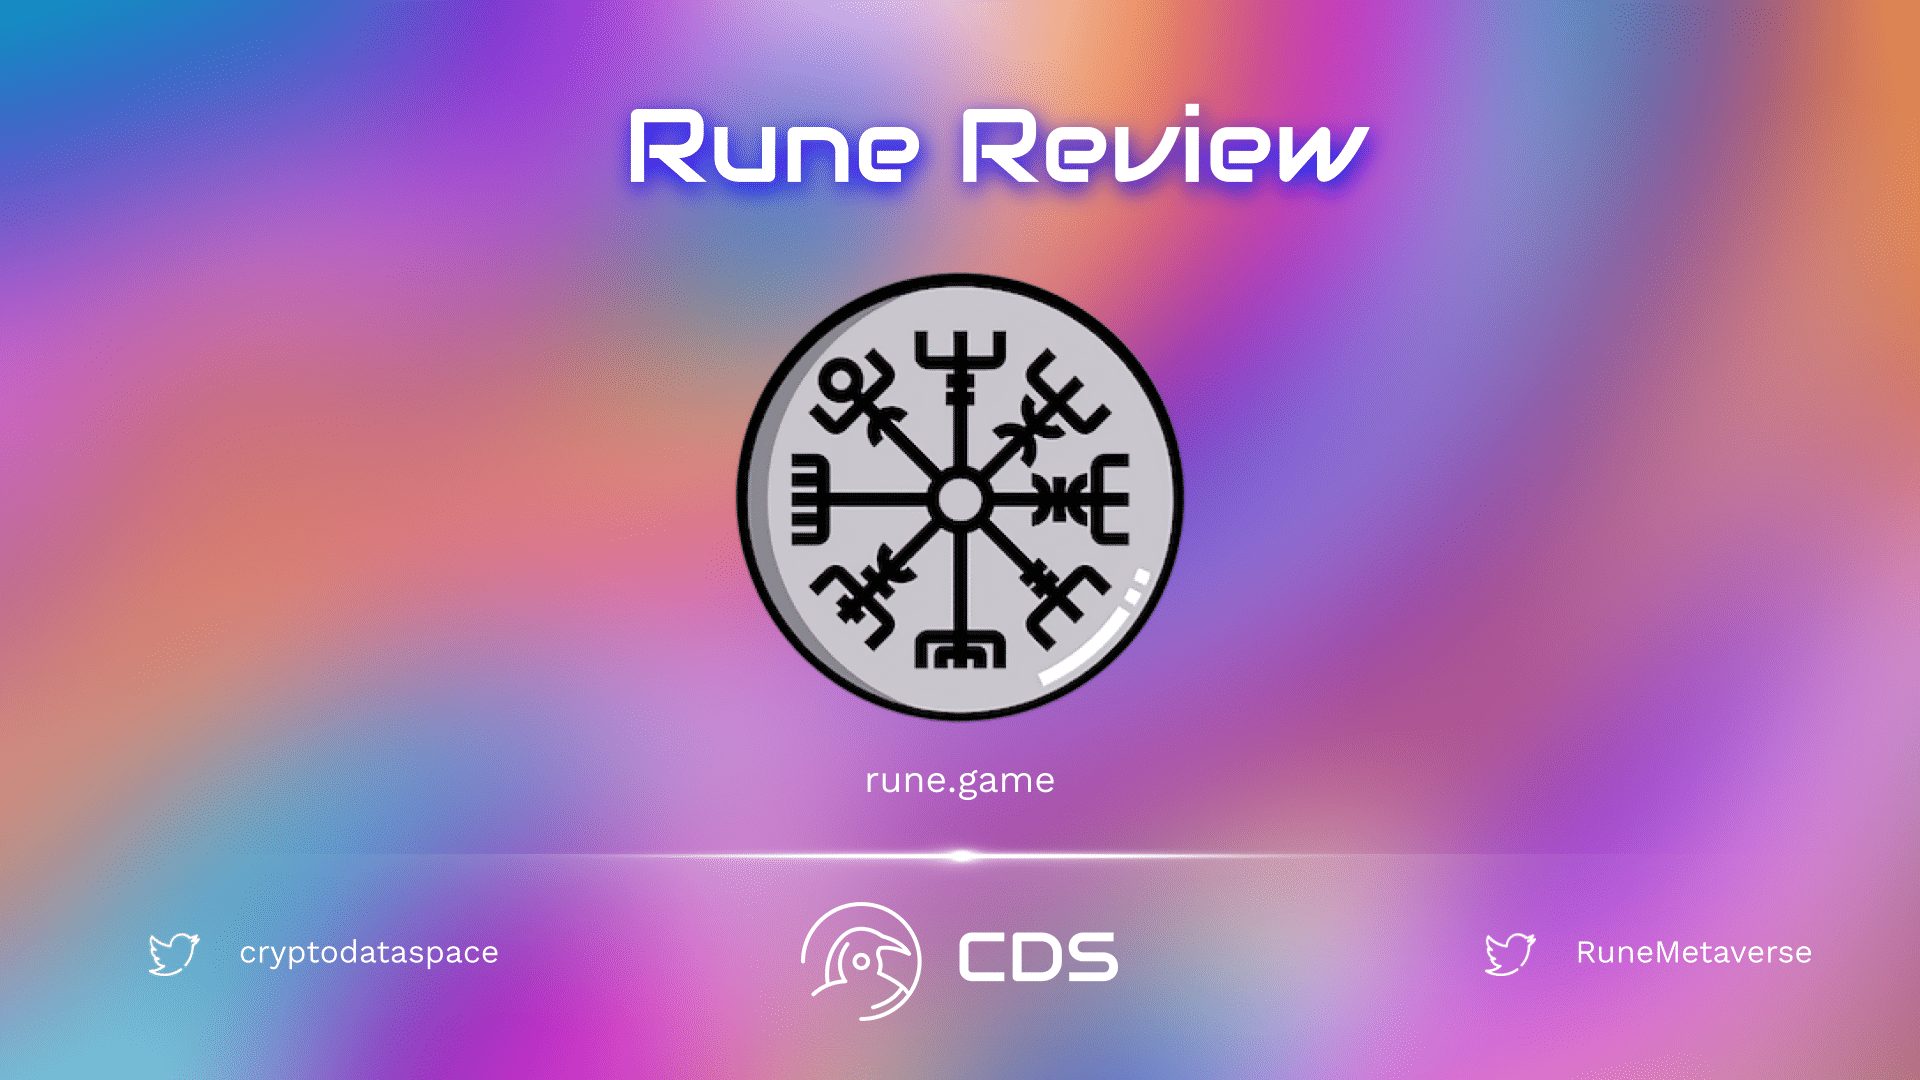 Rune Review